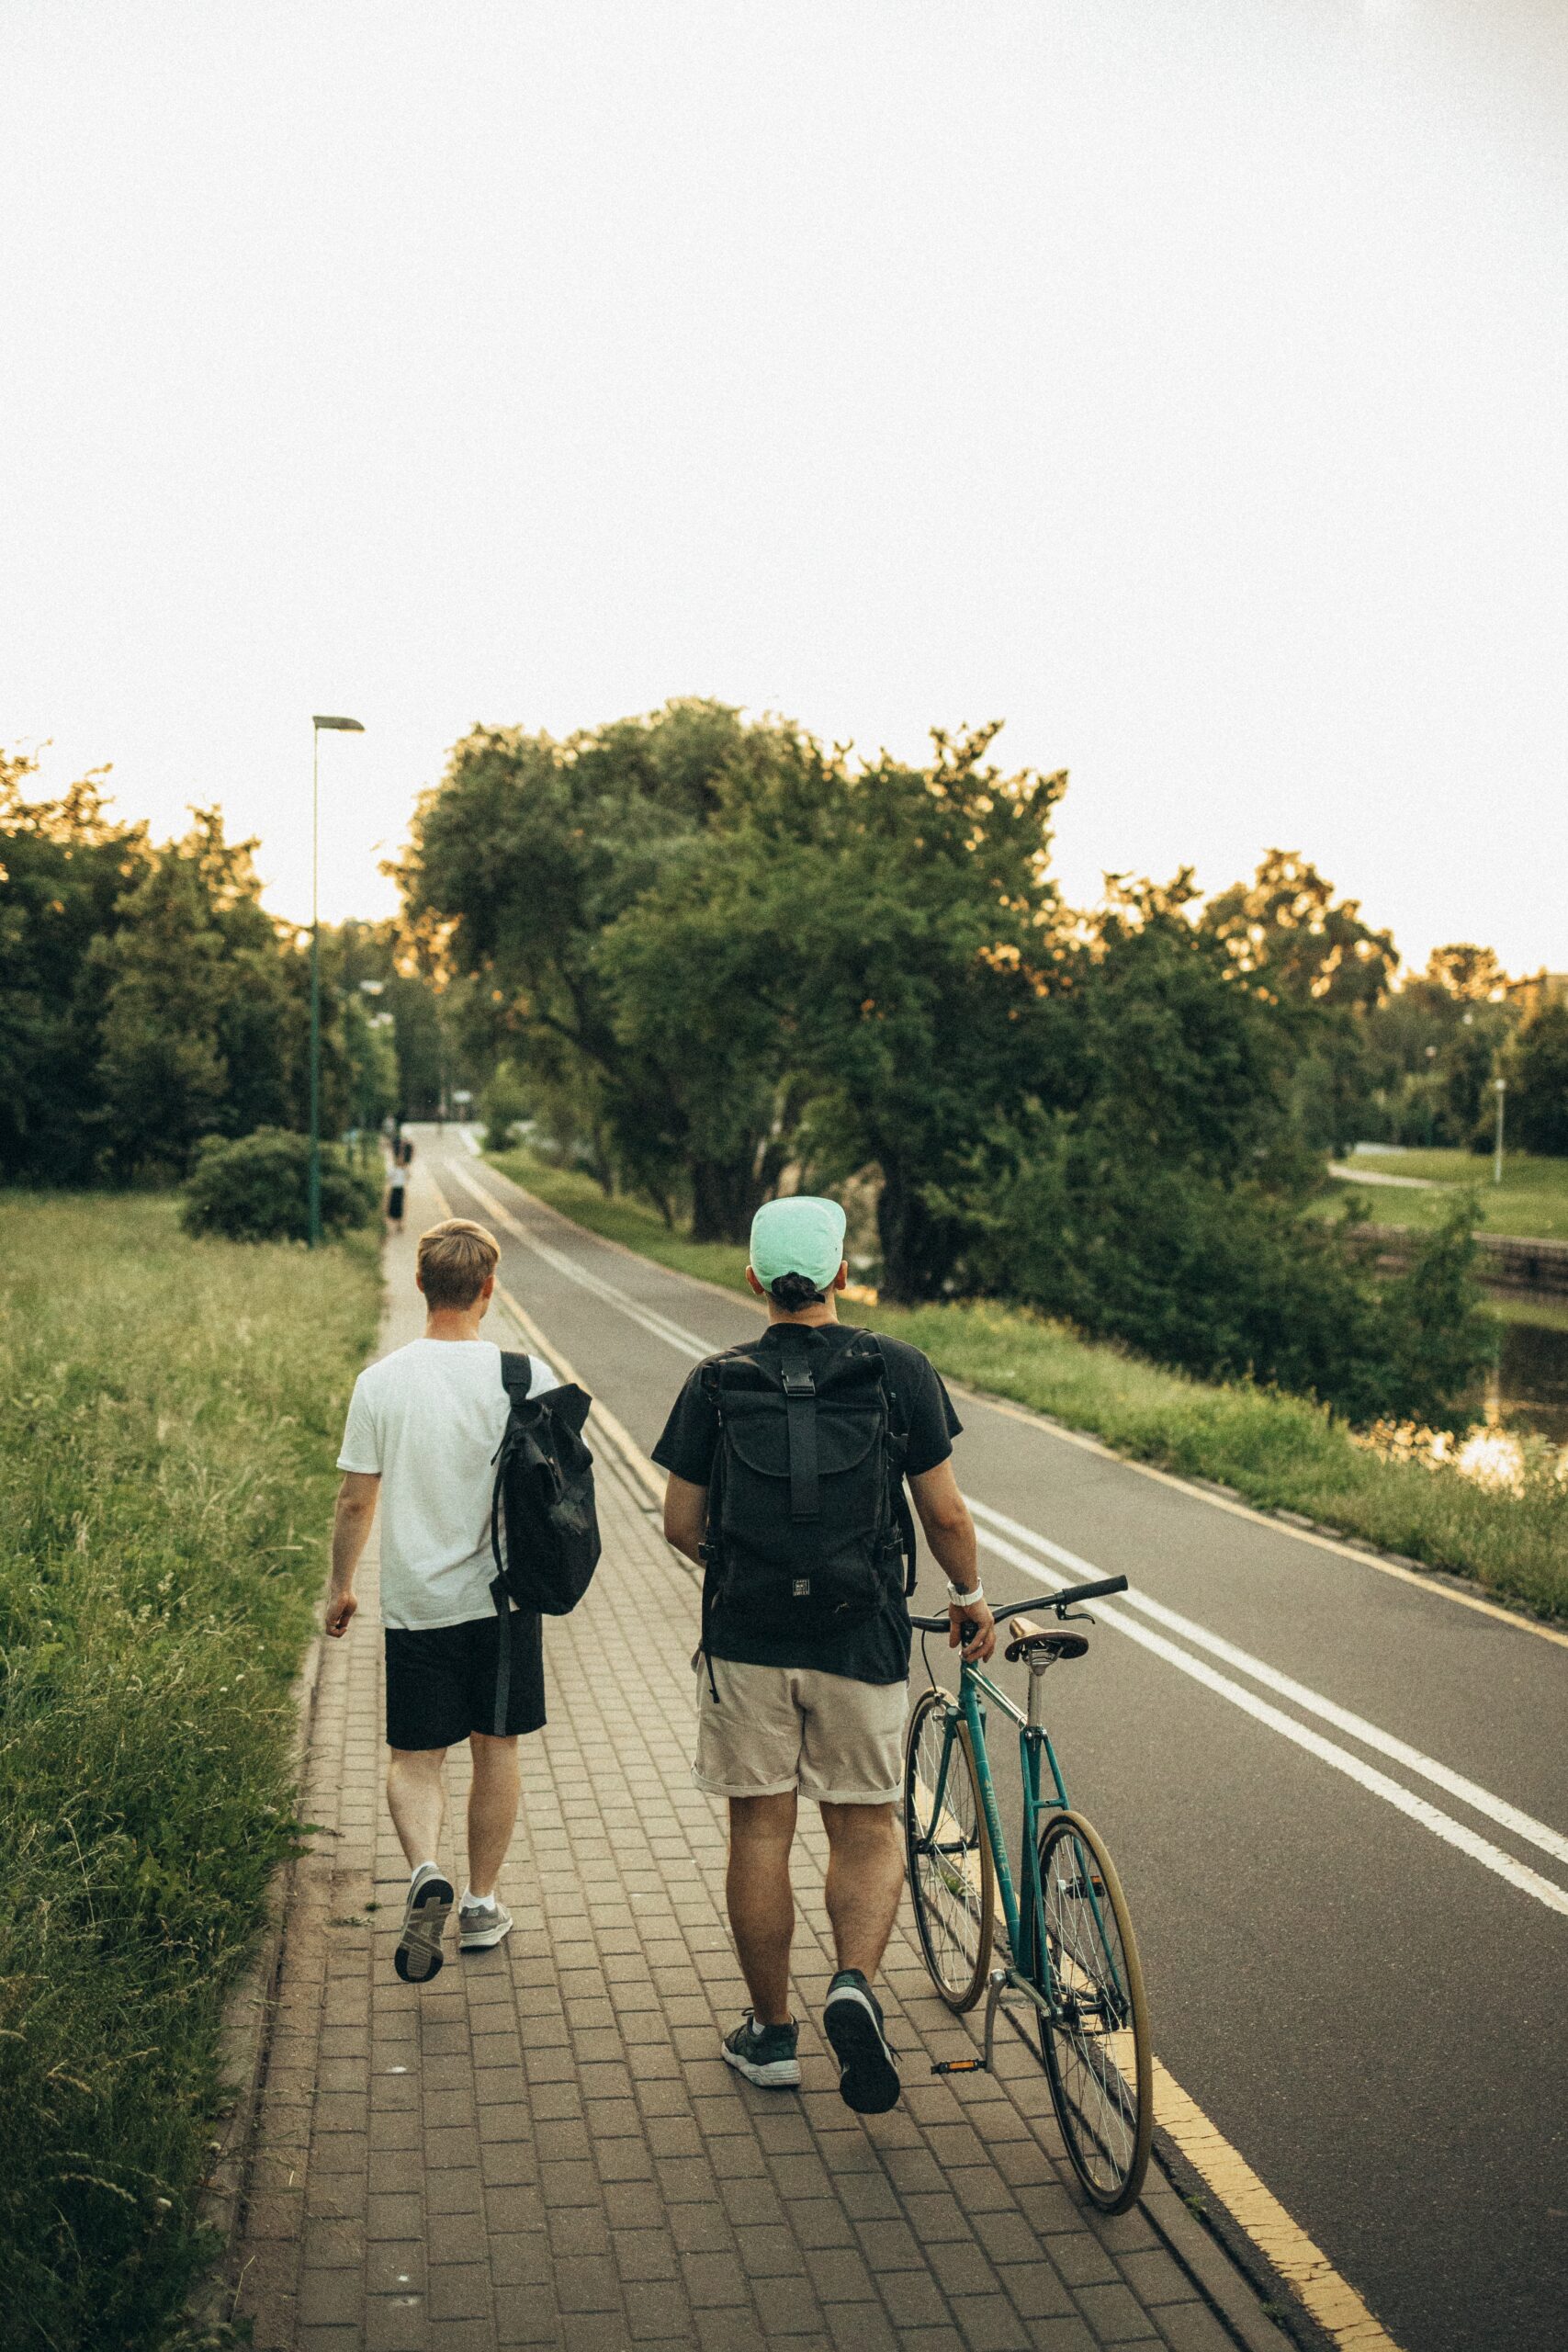 Two men walking with bike